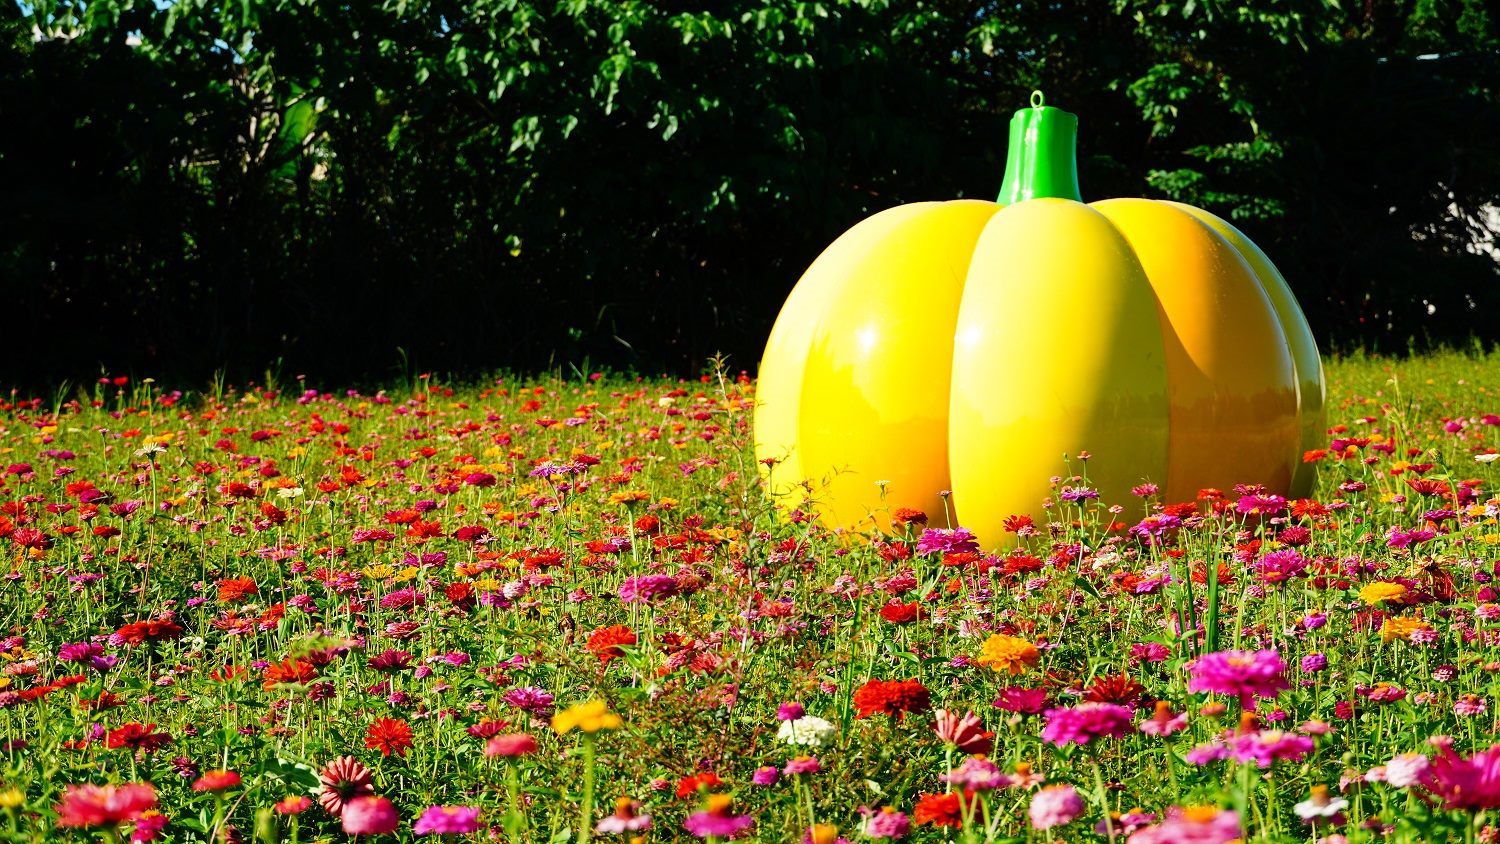 2021 Guandu Hidden Paradise of Flowers: Giant Pumpkins, Haystacks, and More